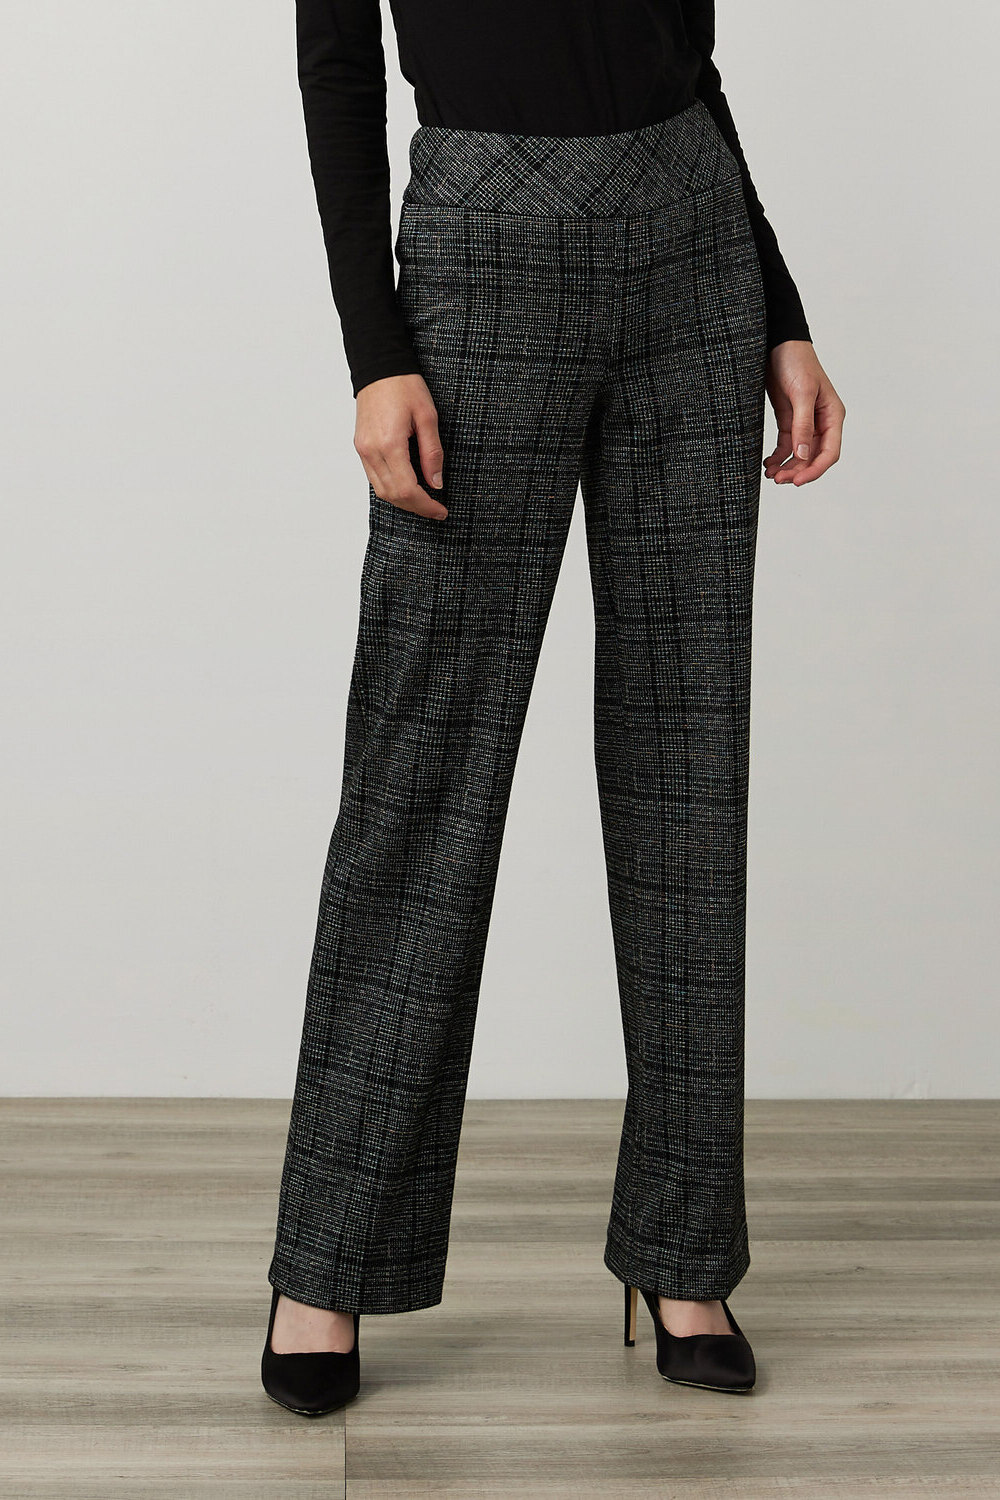 Joseph Ribkoff Pantalon à motif plaid modèle 214107. Noir/multi